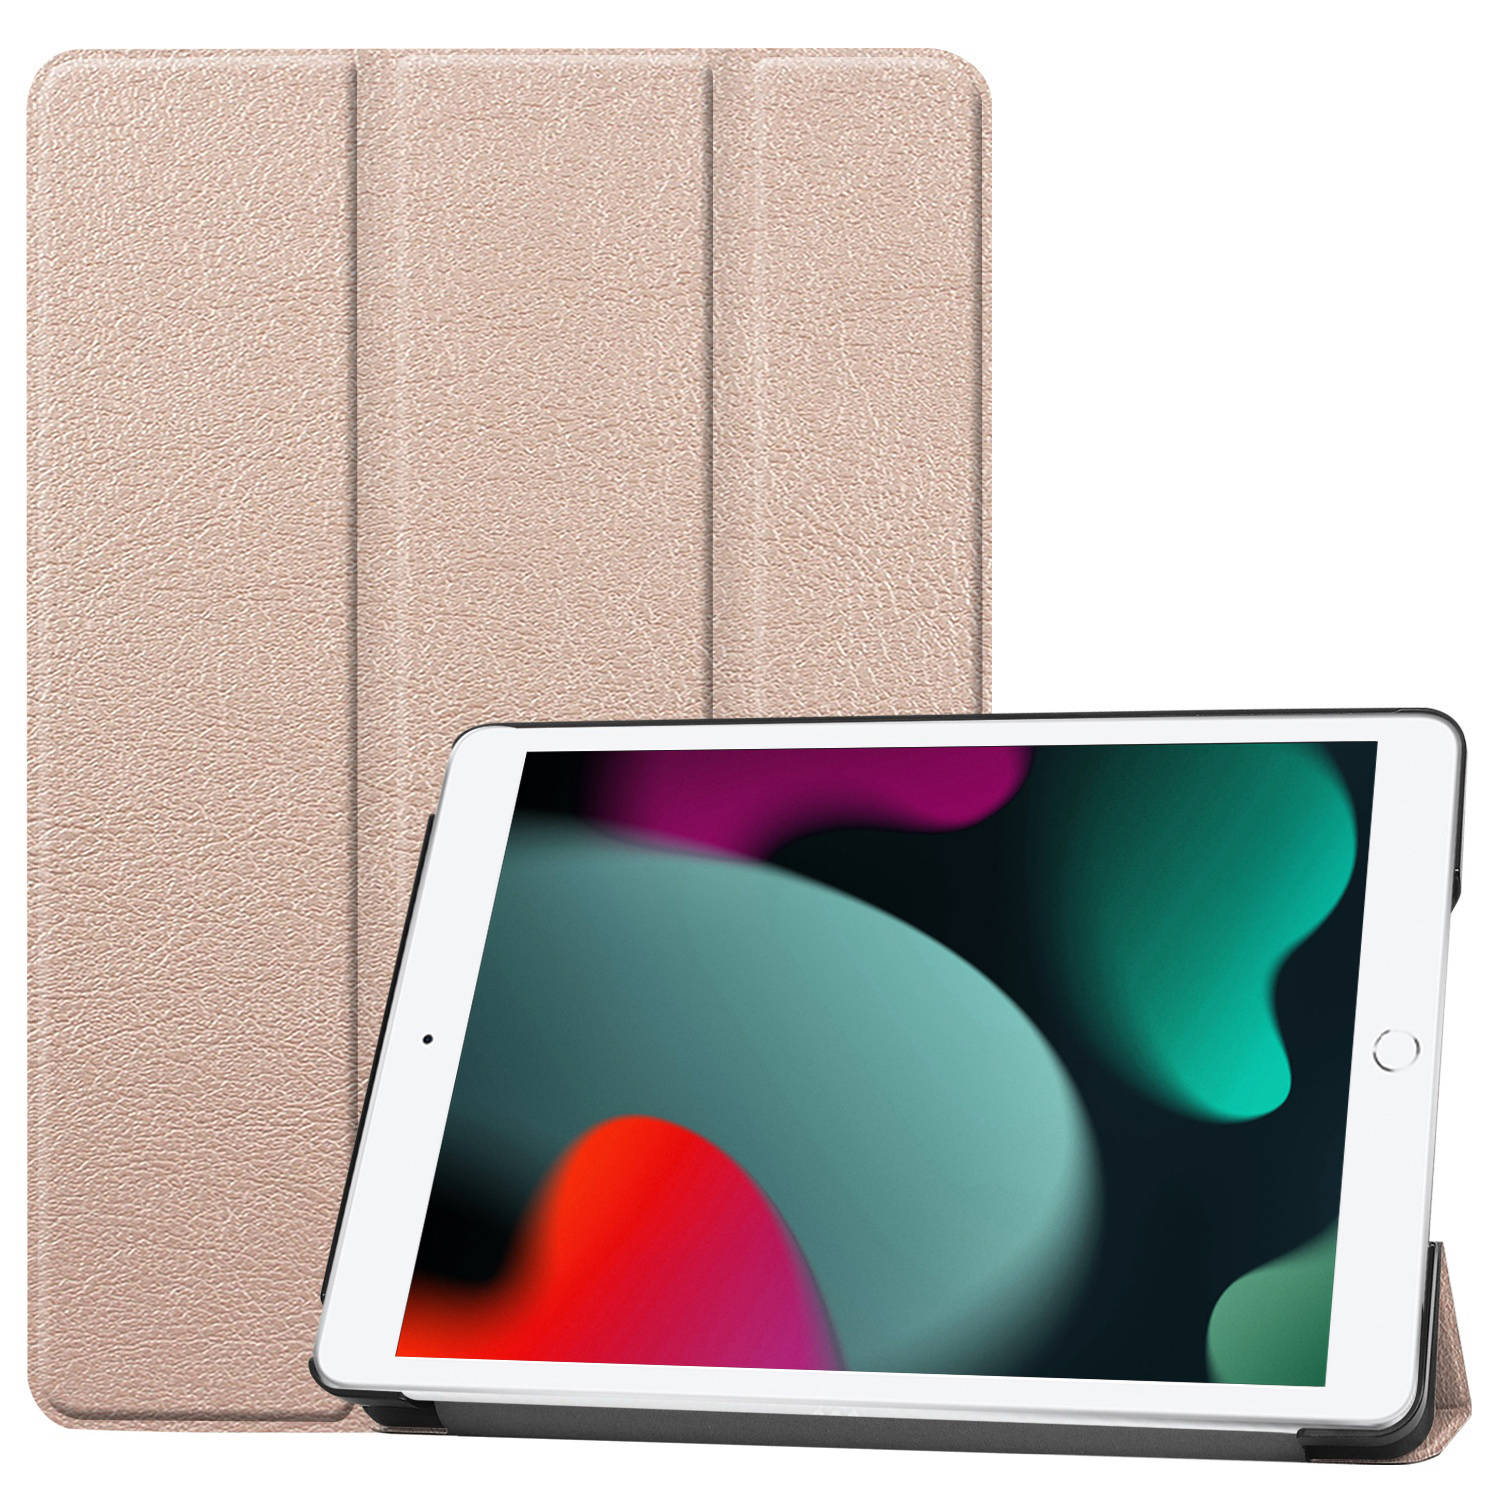 Basey iPad 10.2 2019 Hoes Book Case Hoesje - iPad 10.2 2019 Hoesje Hard Cover Case Hoes - Goud